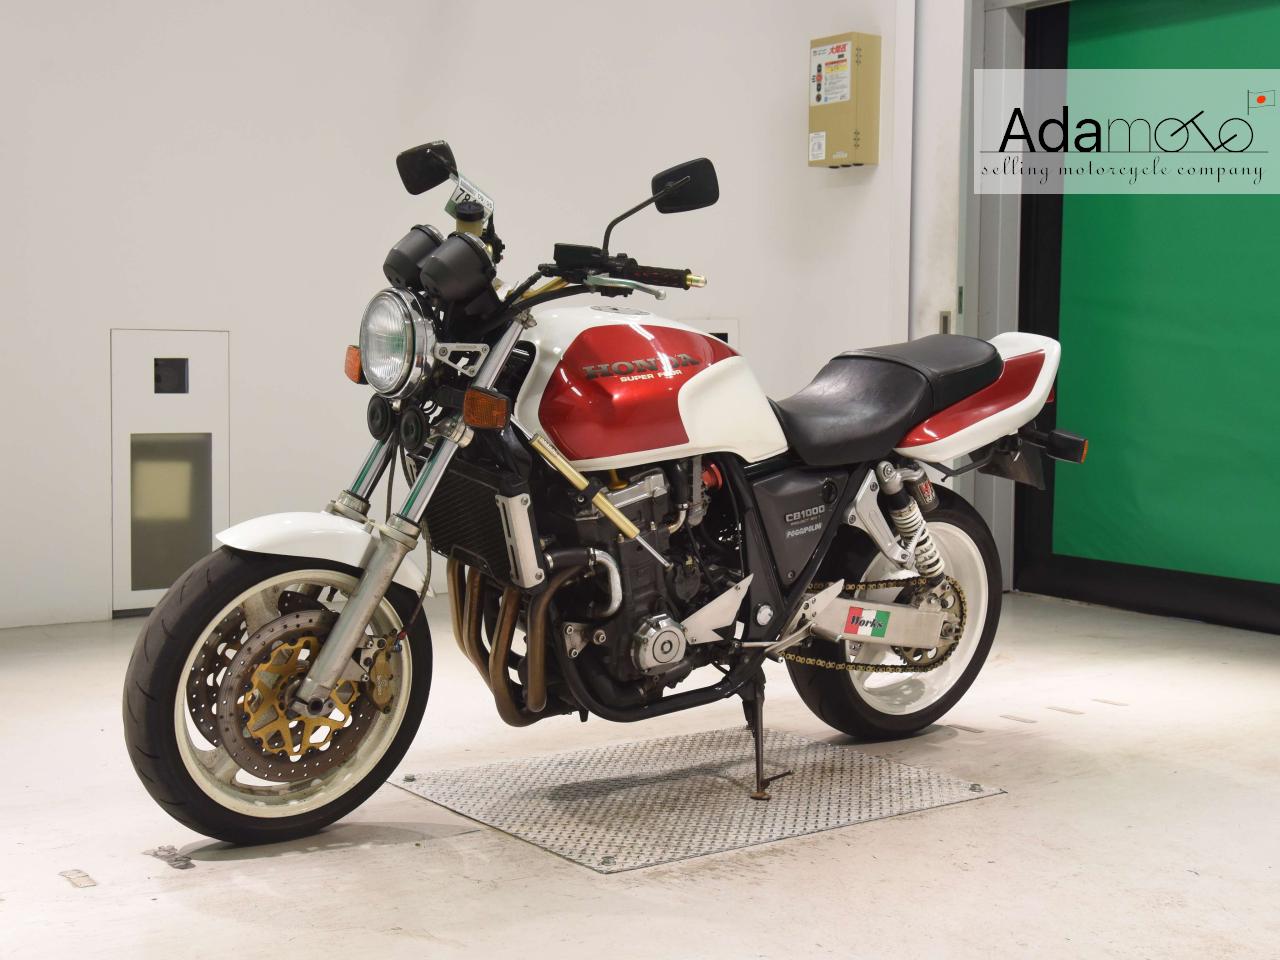 Honda CB1000SF - Adamoto - Motorcycles from Japan